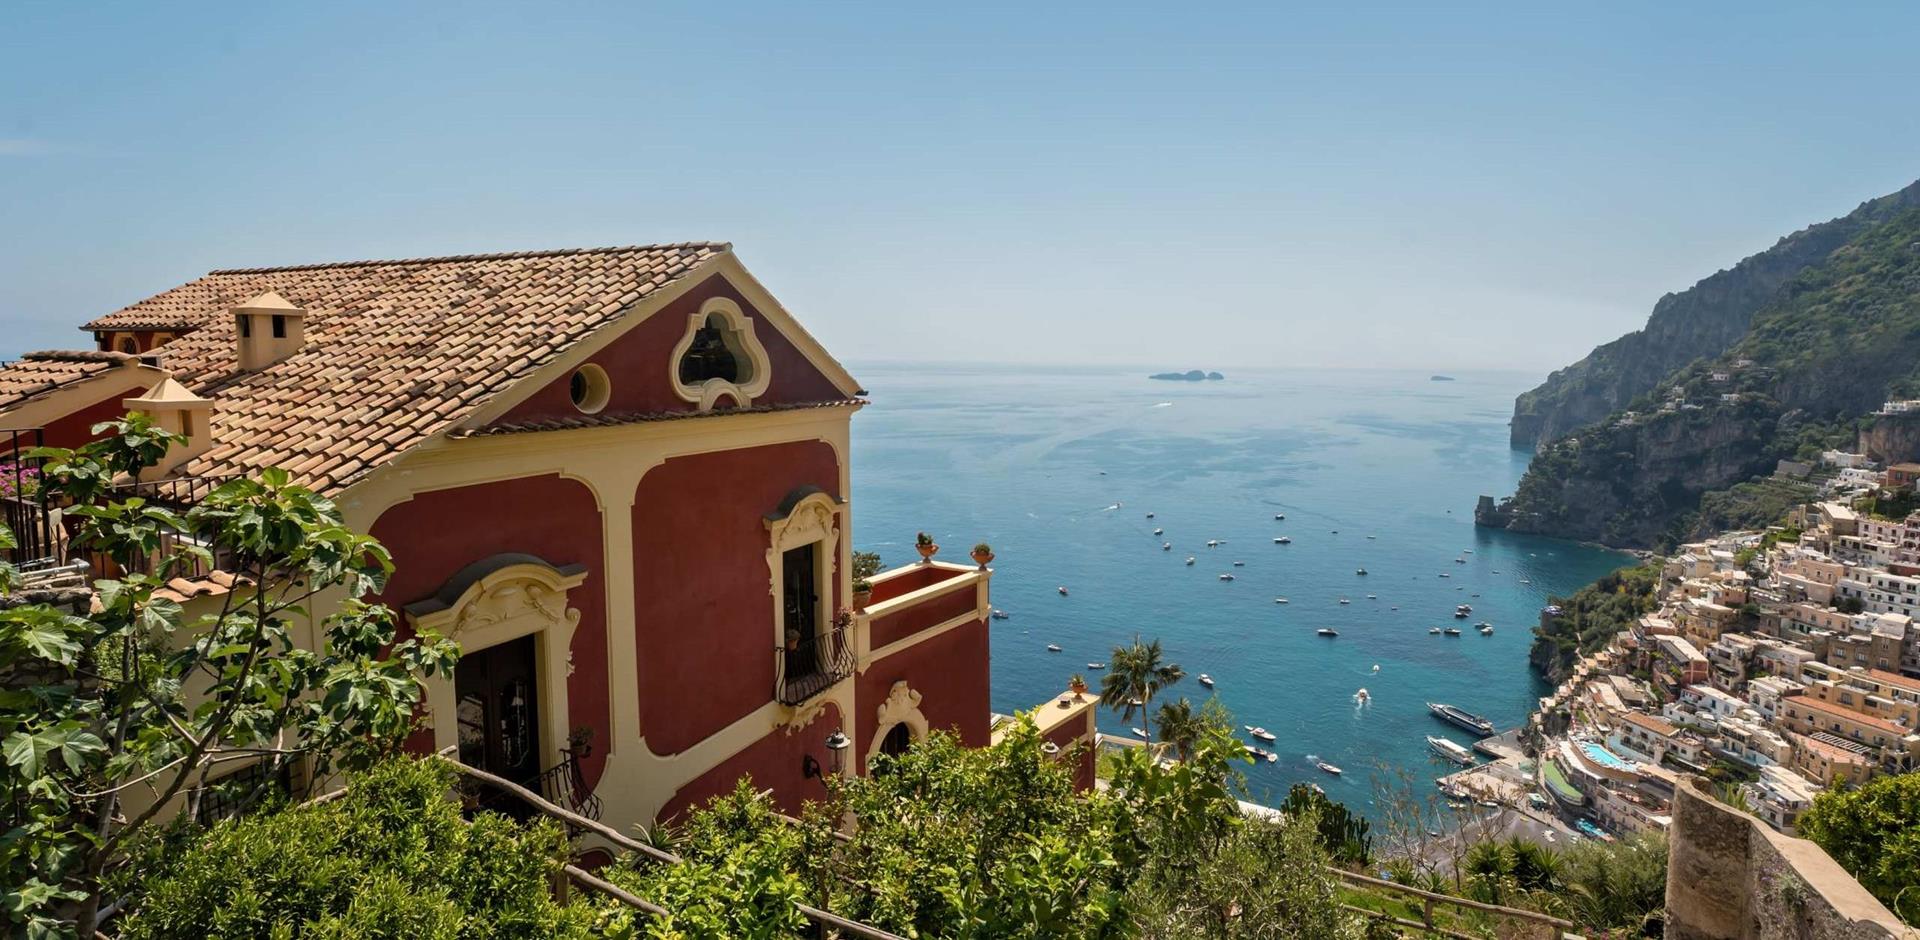 Monastero di Positano, Amalfi Coast, Italy